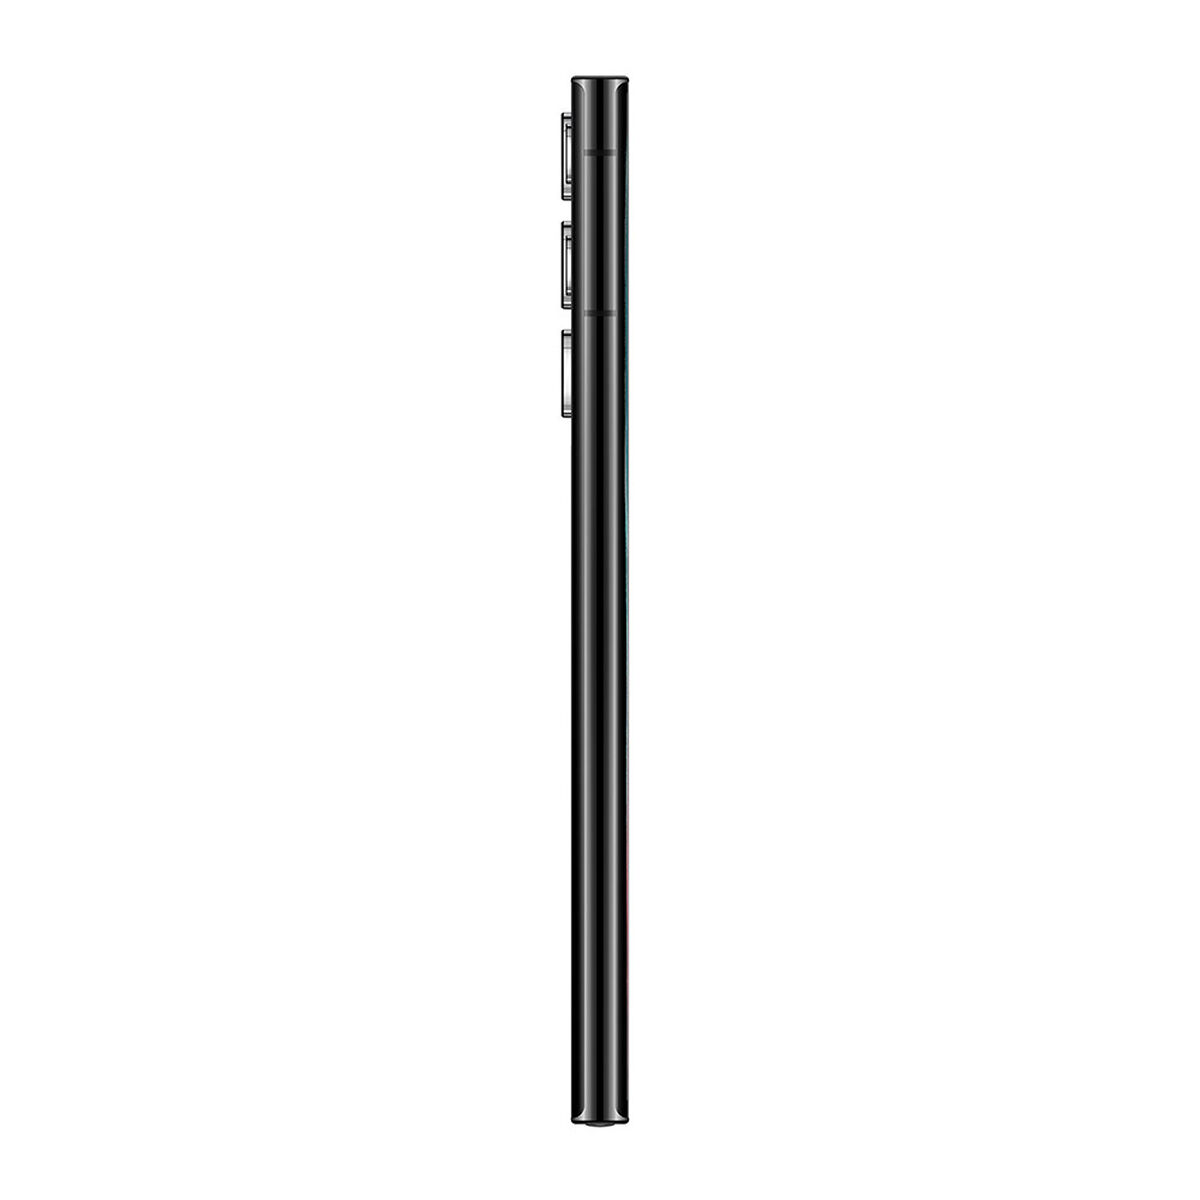 Celular Samsung Galaxy S22 Ultra 256GB 6,8" Phantom Black Liberado